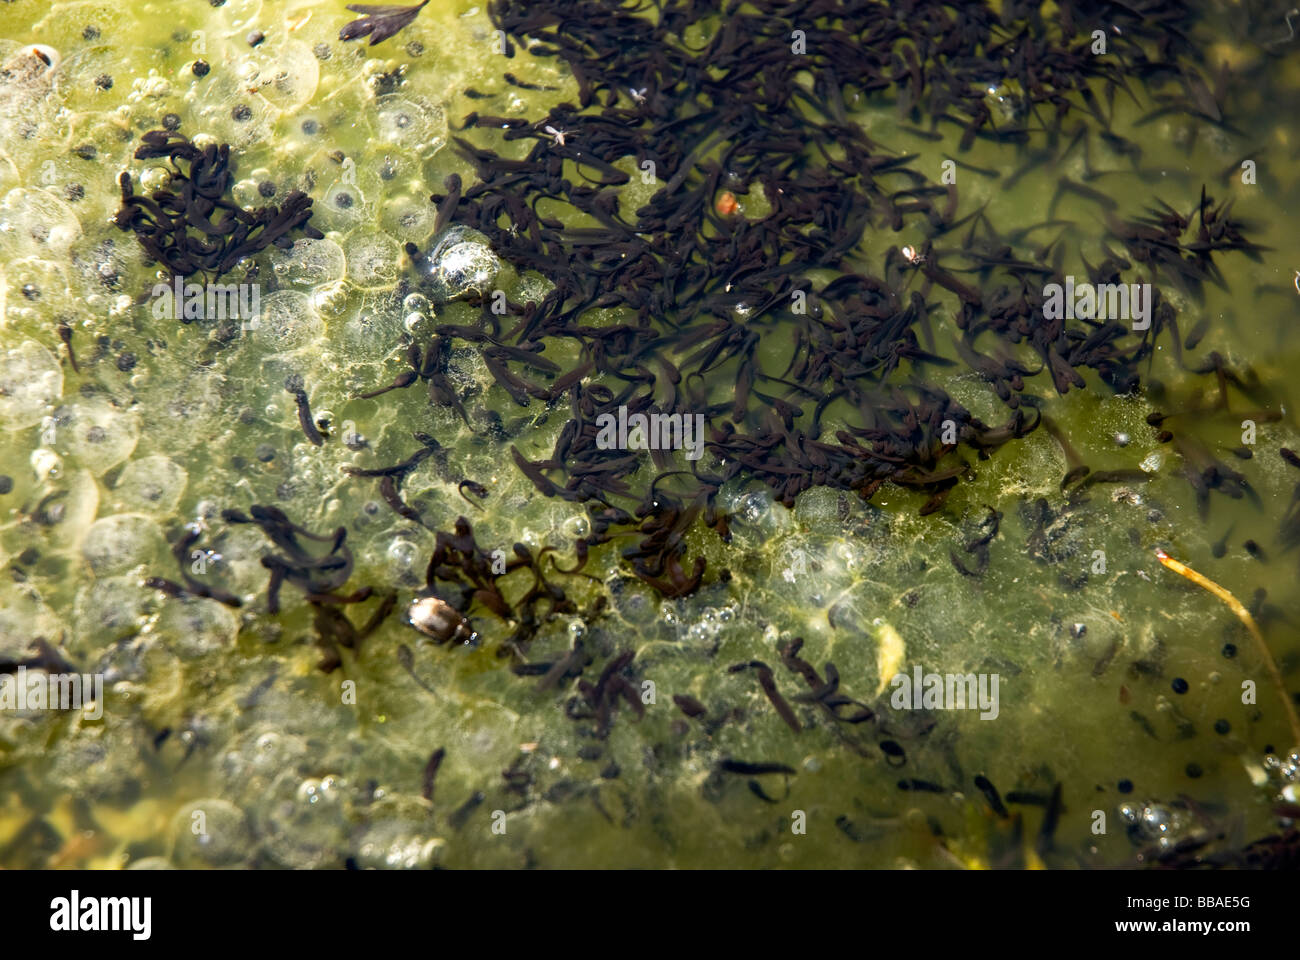 Mass of young tadpoles in suburban garden pond Stock Photo